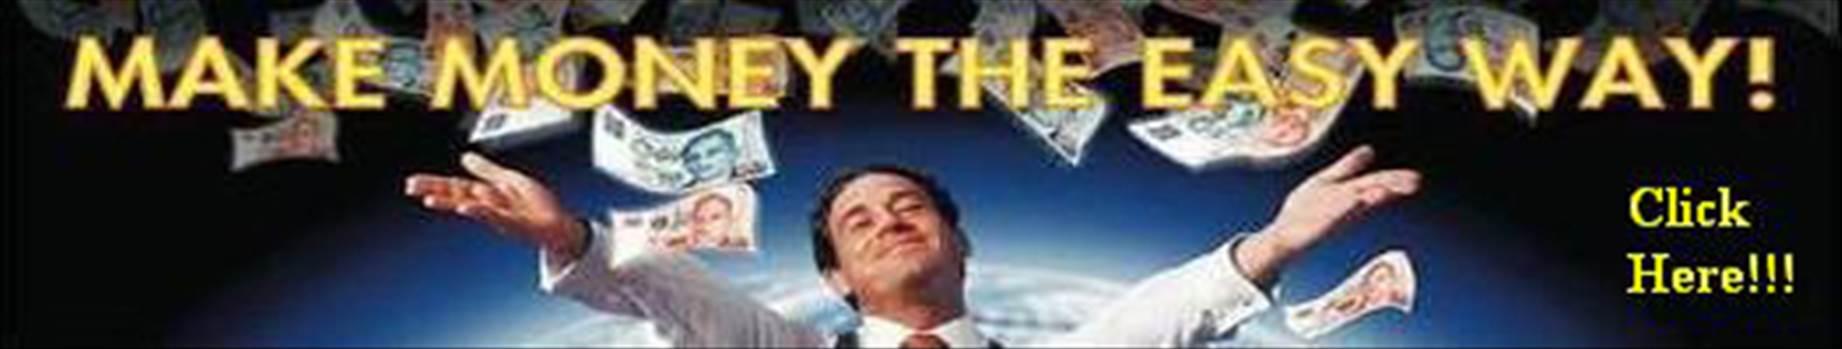 Make-Money-the-easy-way-banner 3.jpg - 